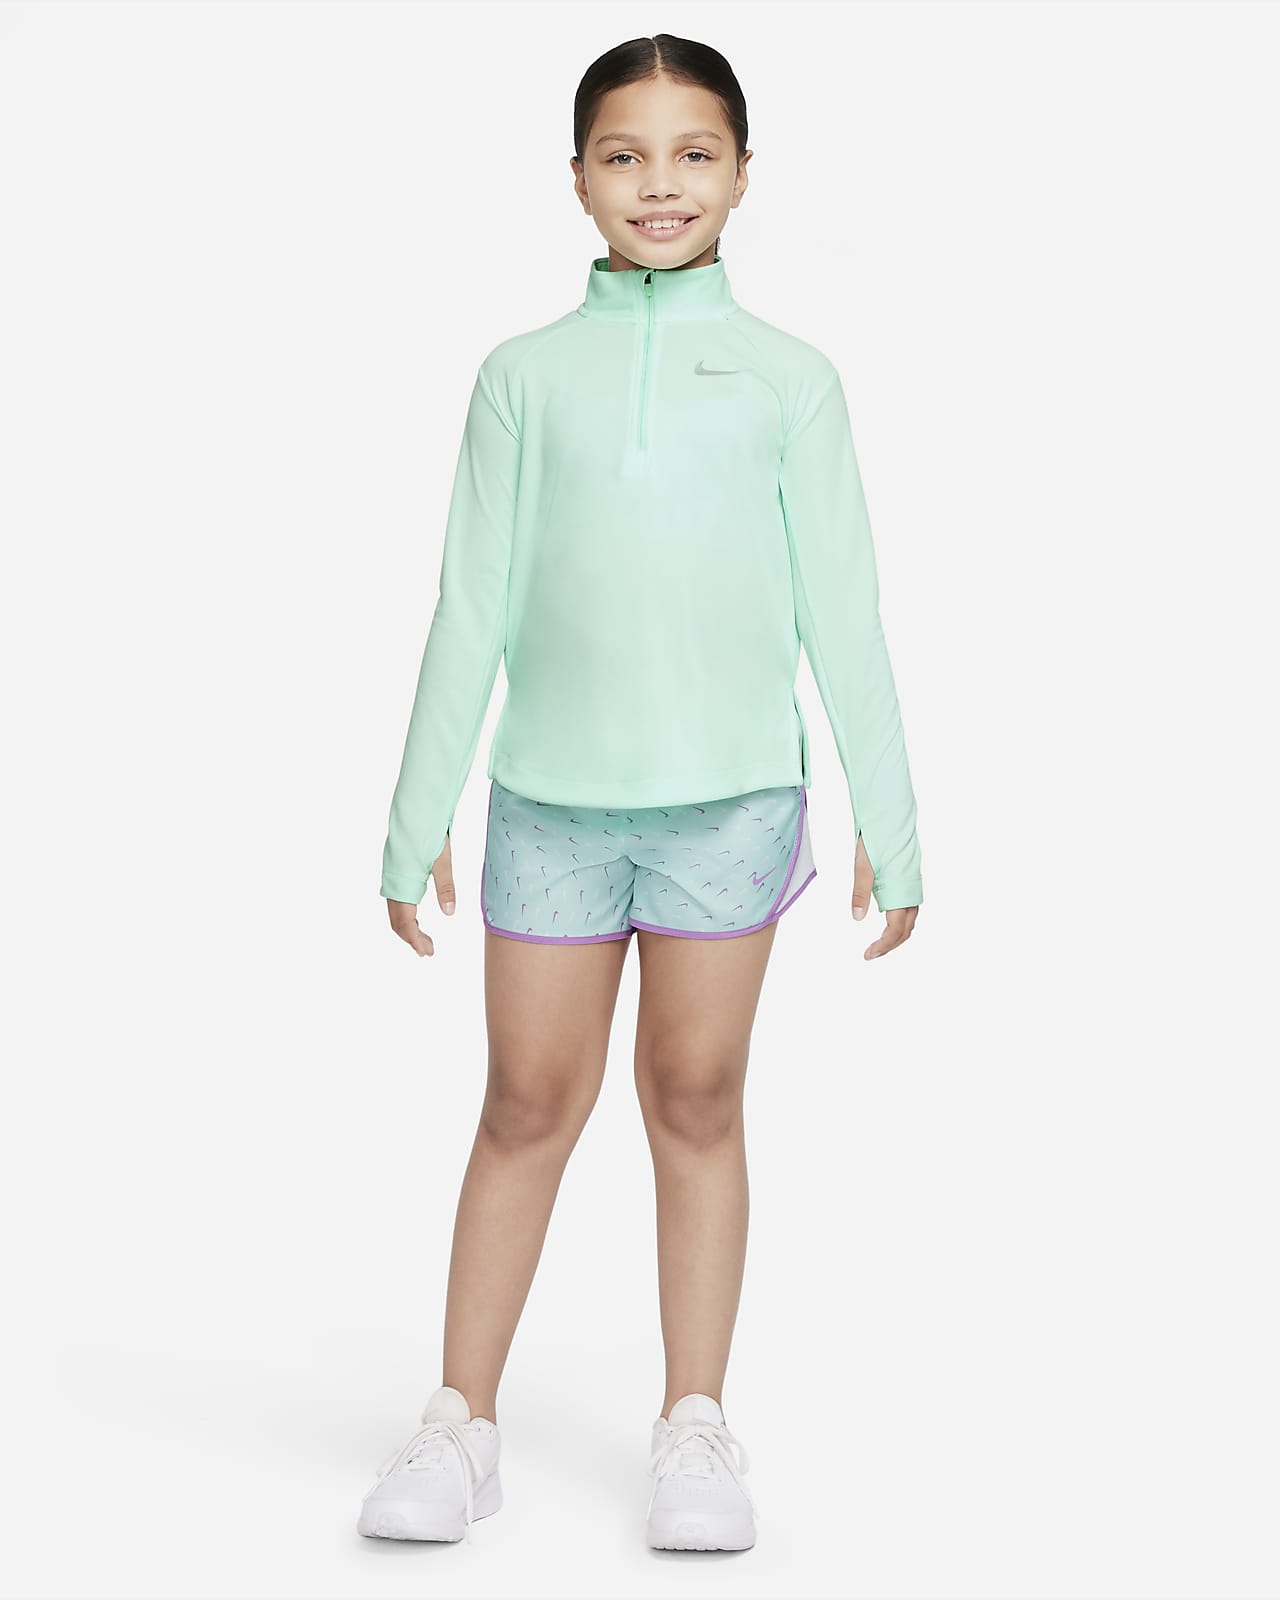 Nike Store Nike Tempo Big Kids' (Girls') Dri-FIT Running Shorts..com 25.00